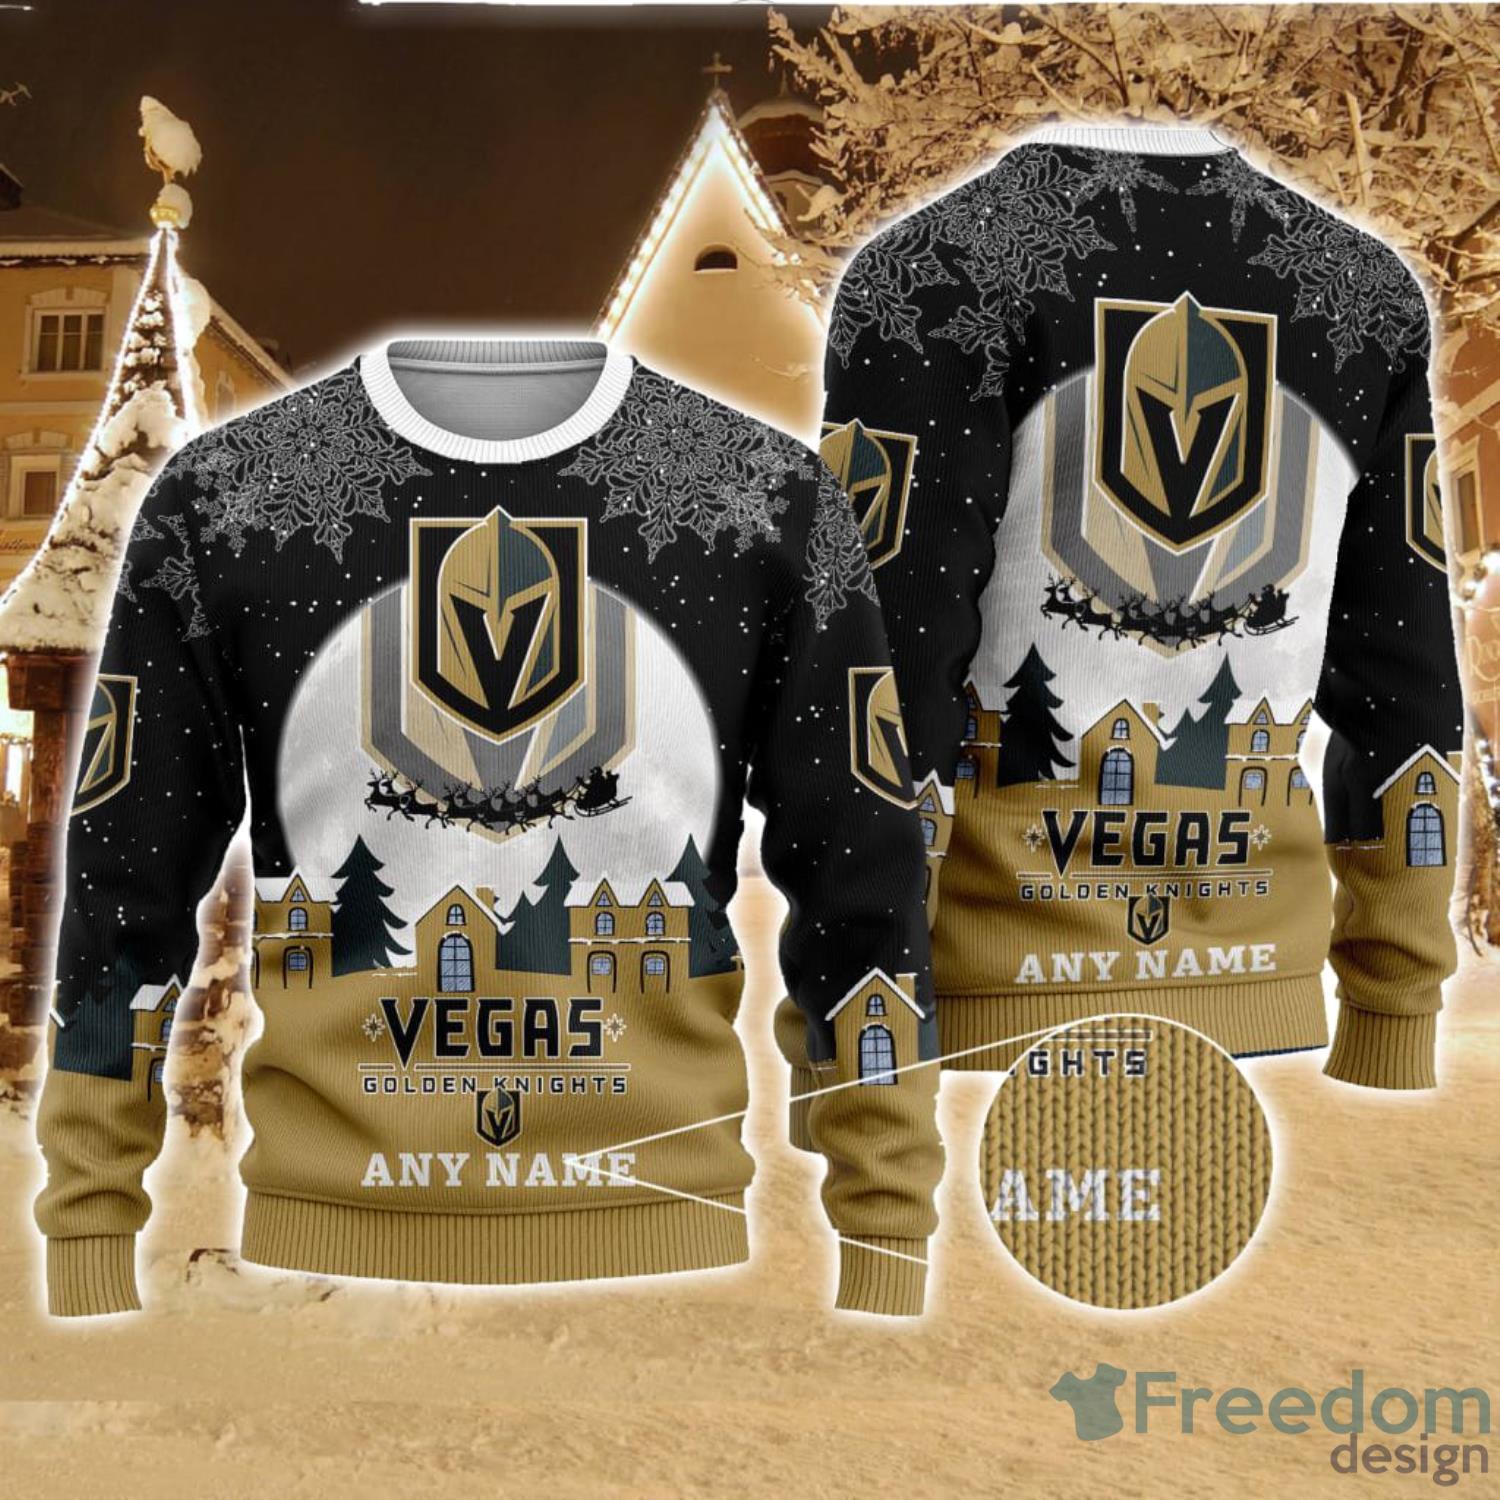 Vegas Golden Knights Custom Personalized Gold Design Baseball